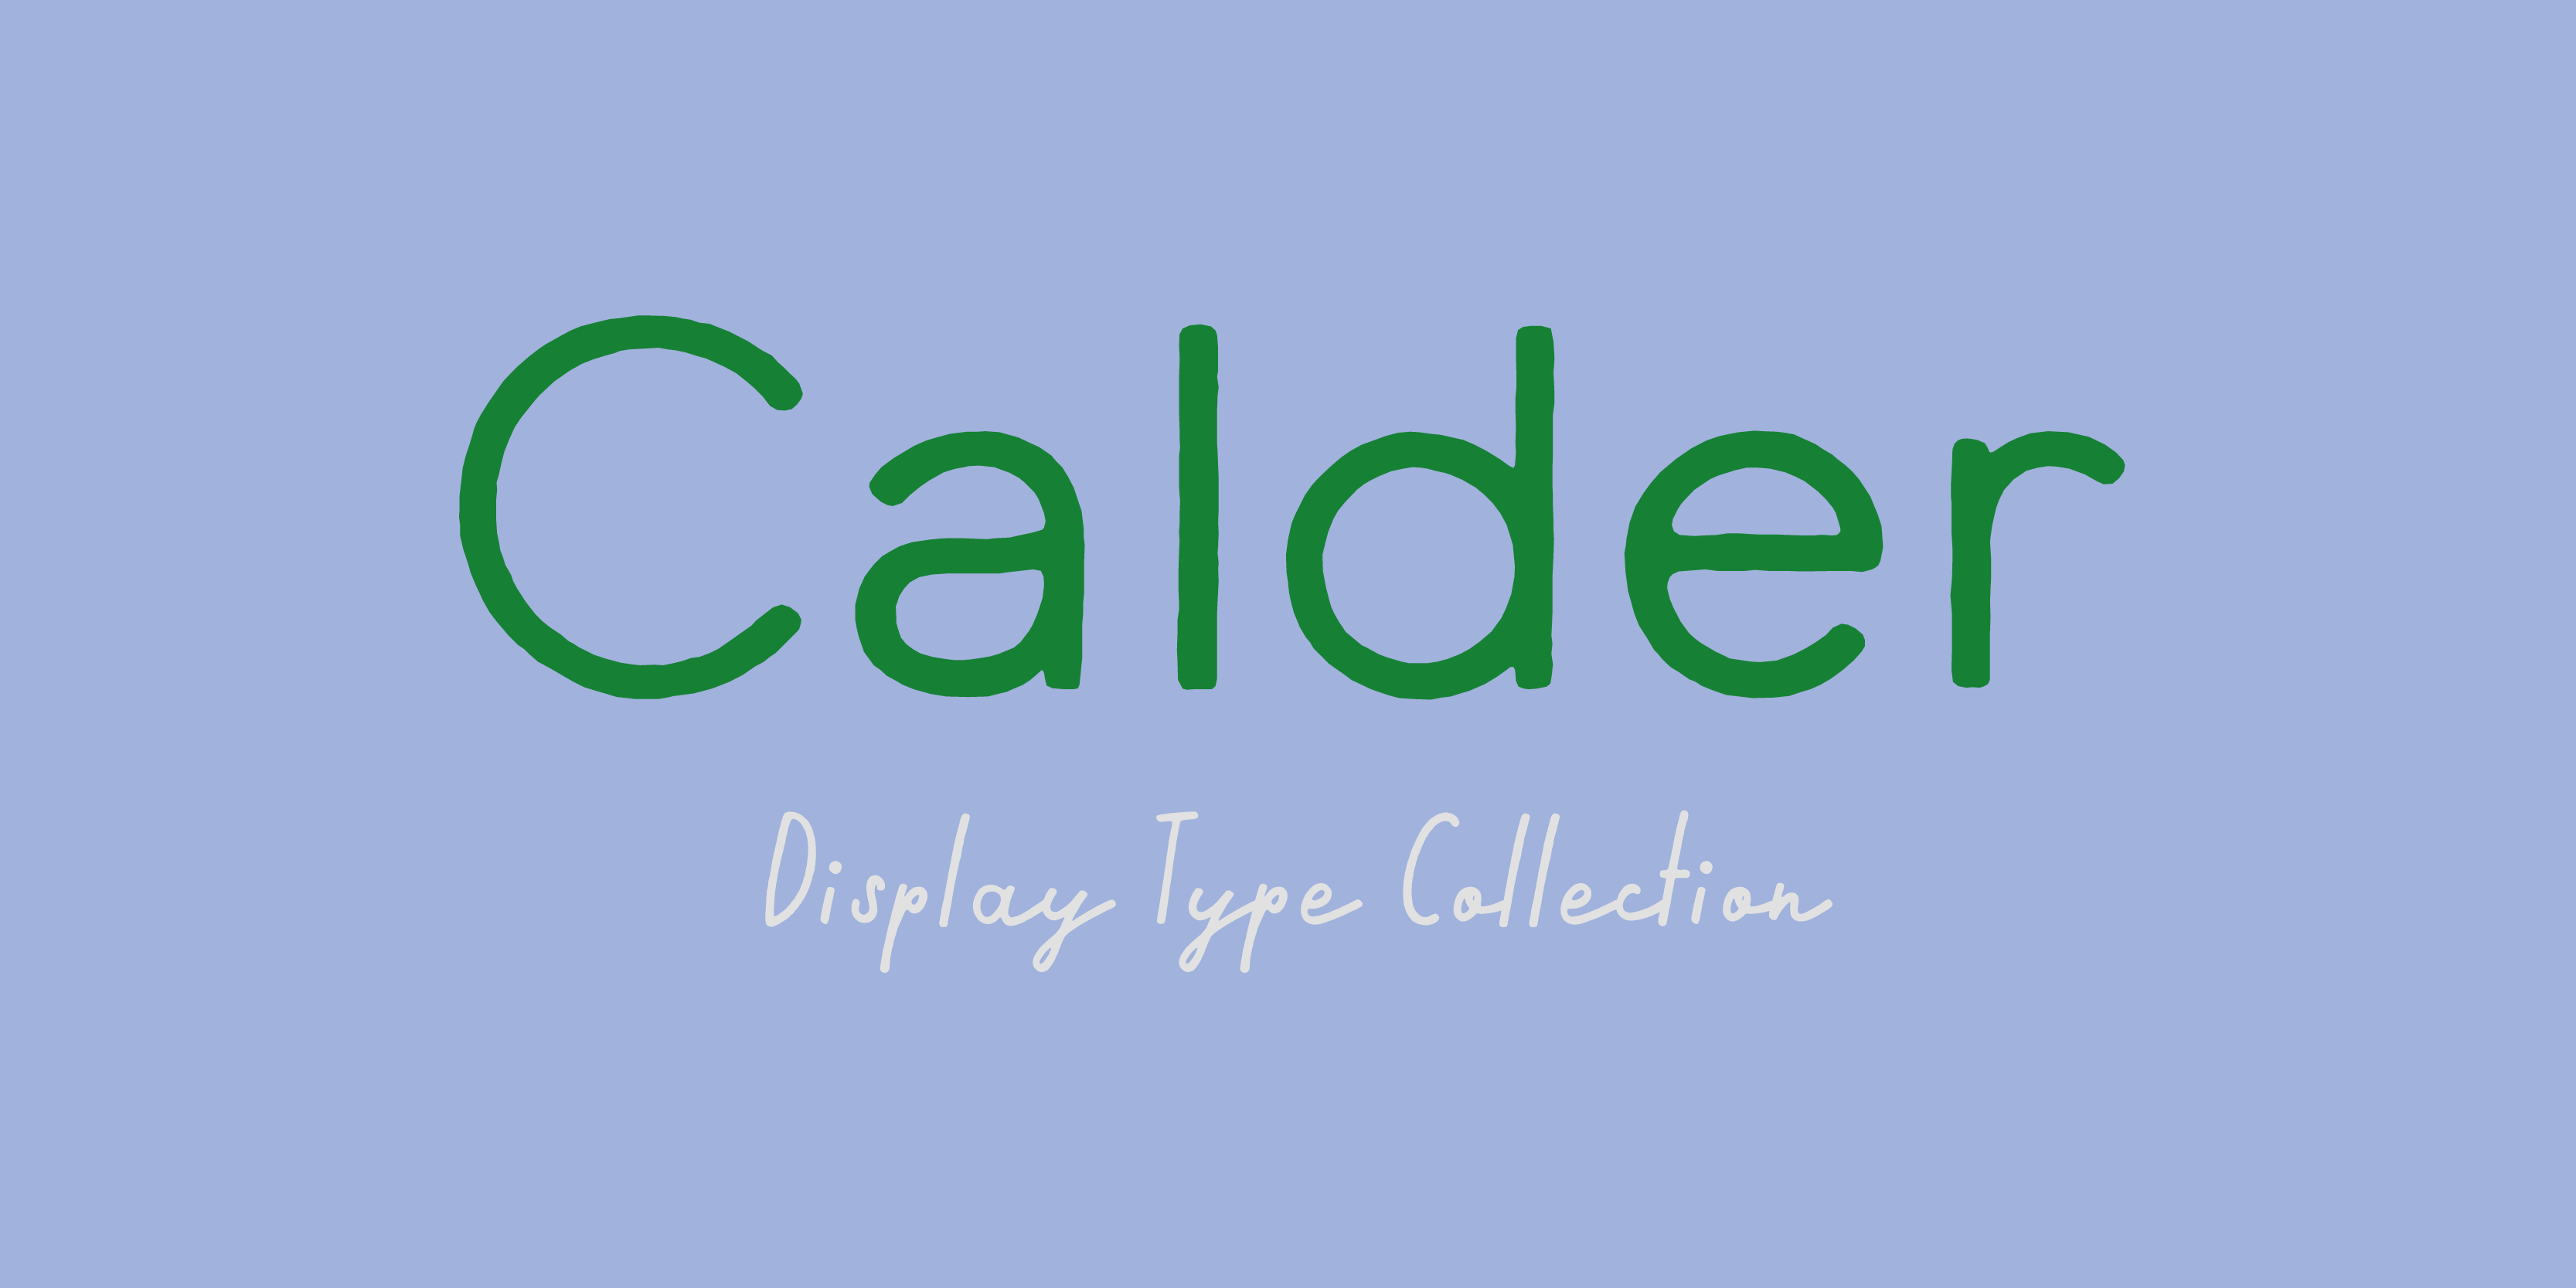 Card displaying Calder typeface in various styles